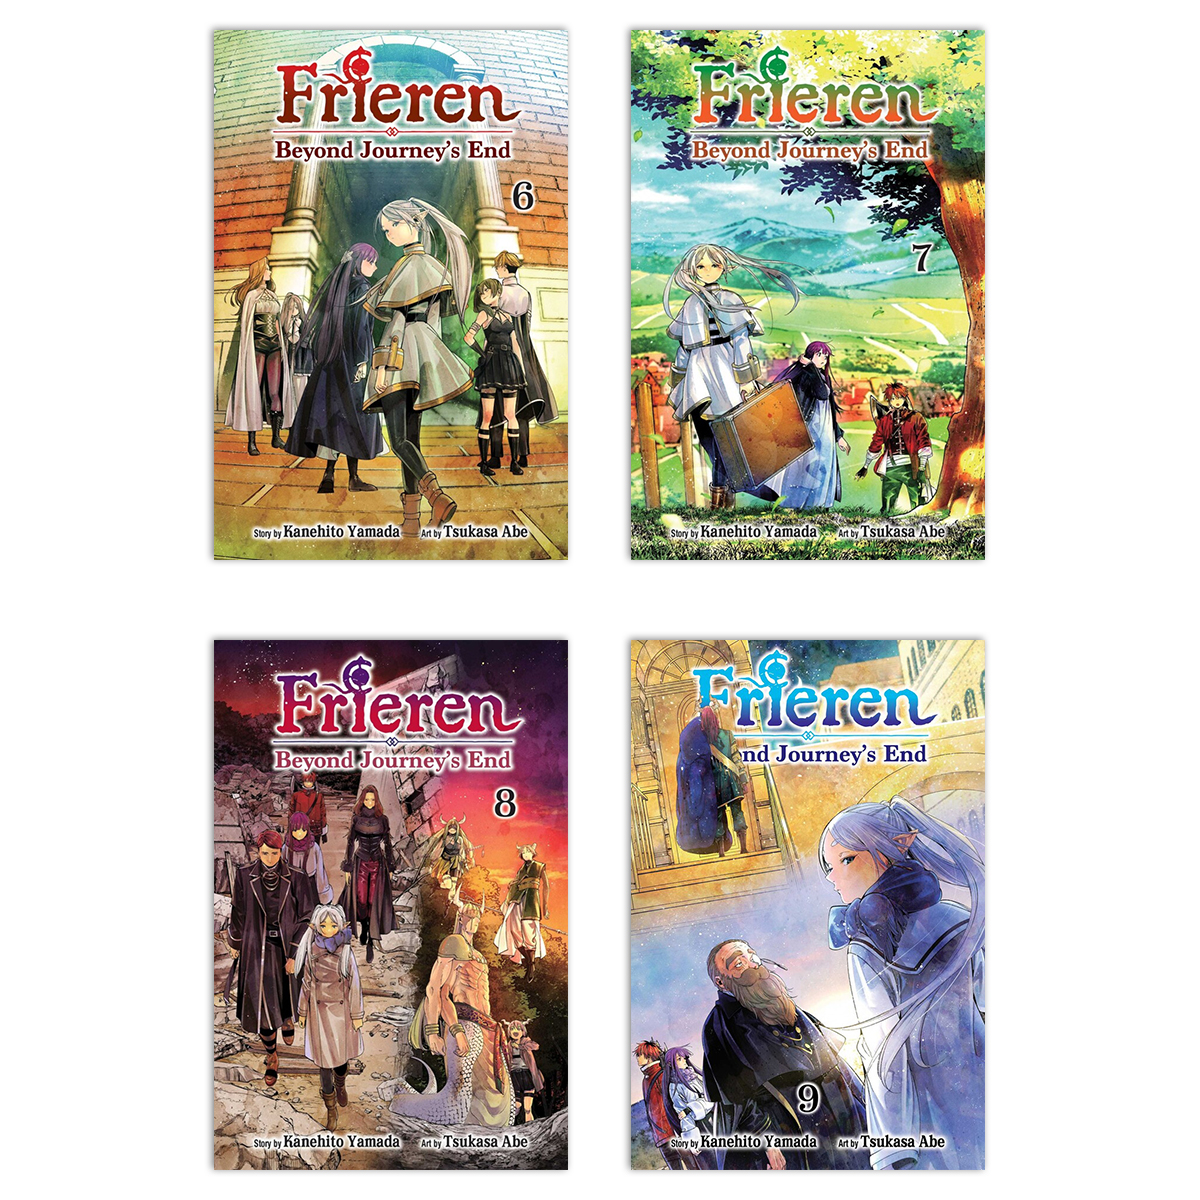 frieren-beyond-journeys-end-manga-6-9-bundle image count 0